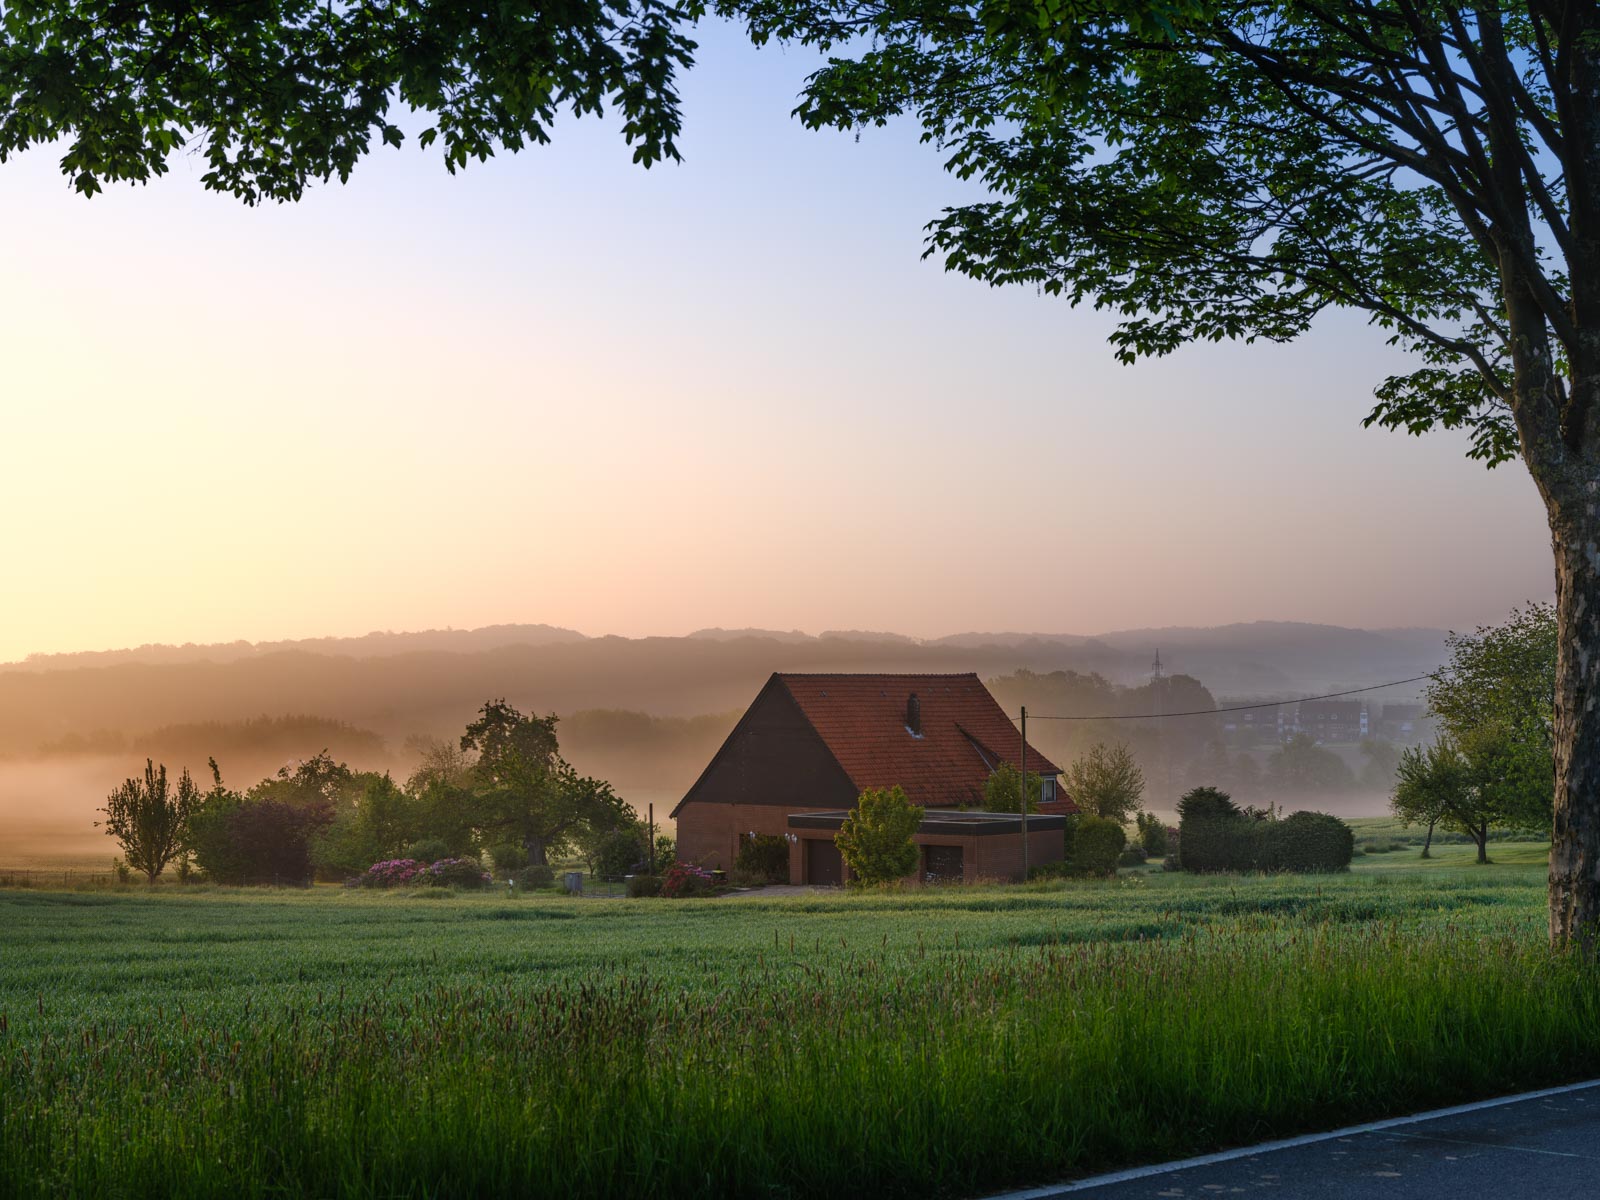 House in the fields at sunrise in May 2021 (Bielefeld-Dornberg, Germany).